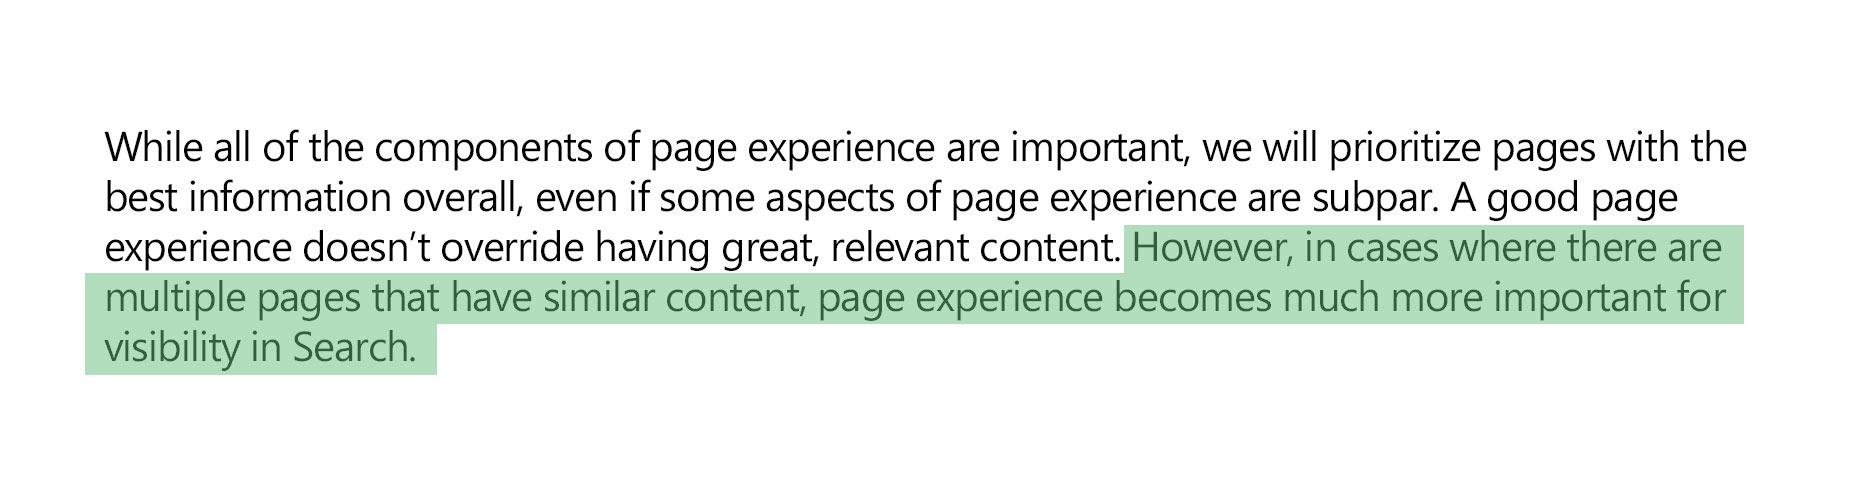 Google Core Web Vitals - Page Experience Quote